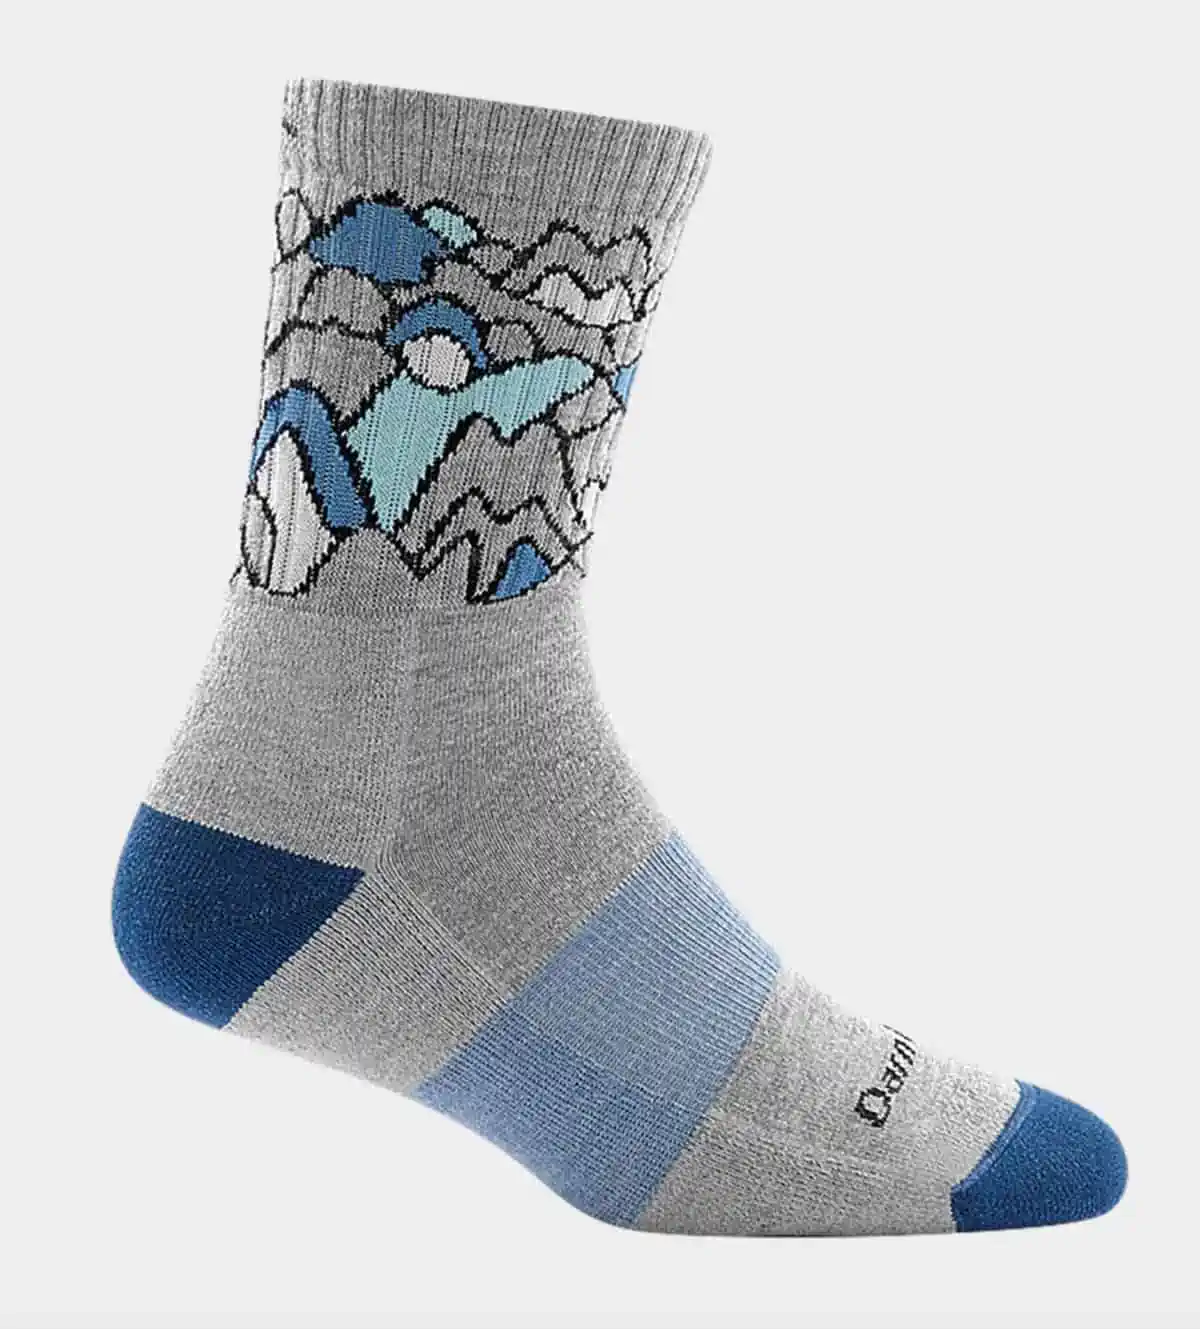 Grey vegan hiking socks with mountain art from Darn Tough brand.